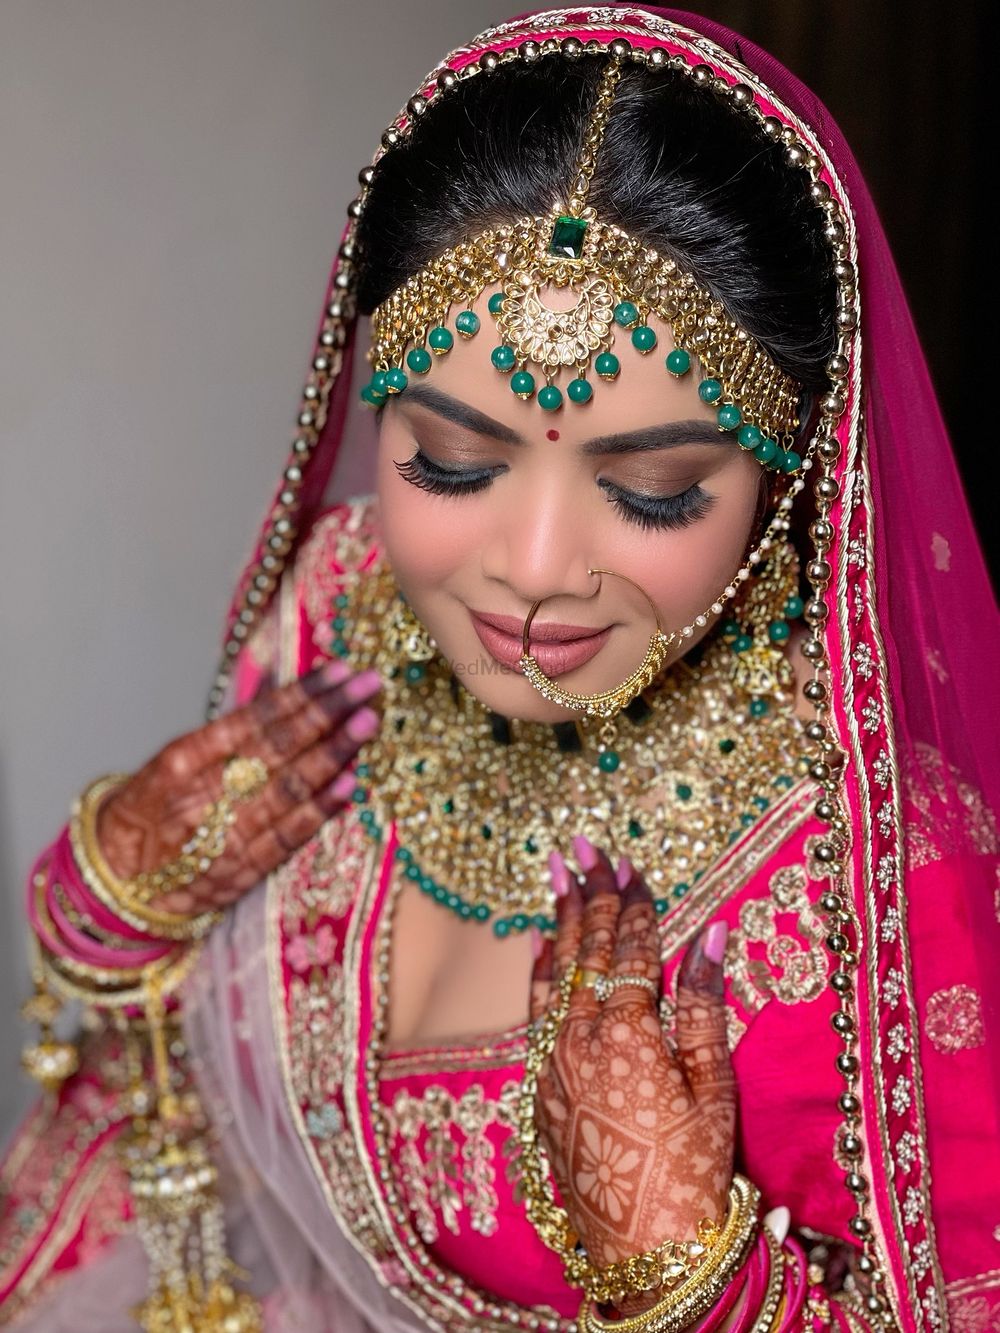 Photo By Makeup Artist Jyoti Bhaya  - Bridal Makeup